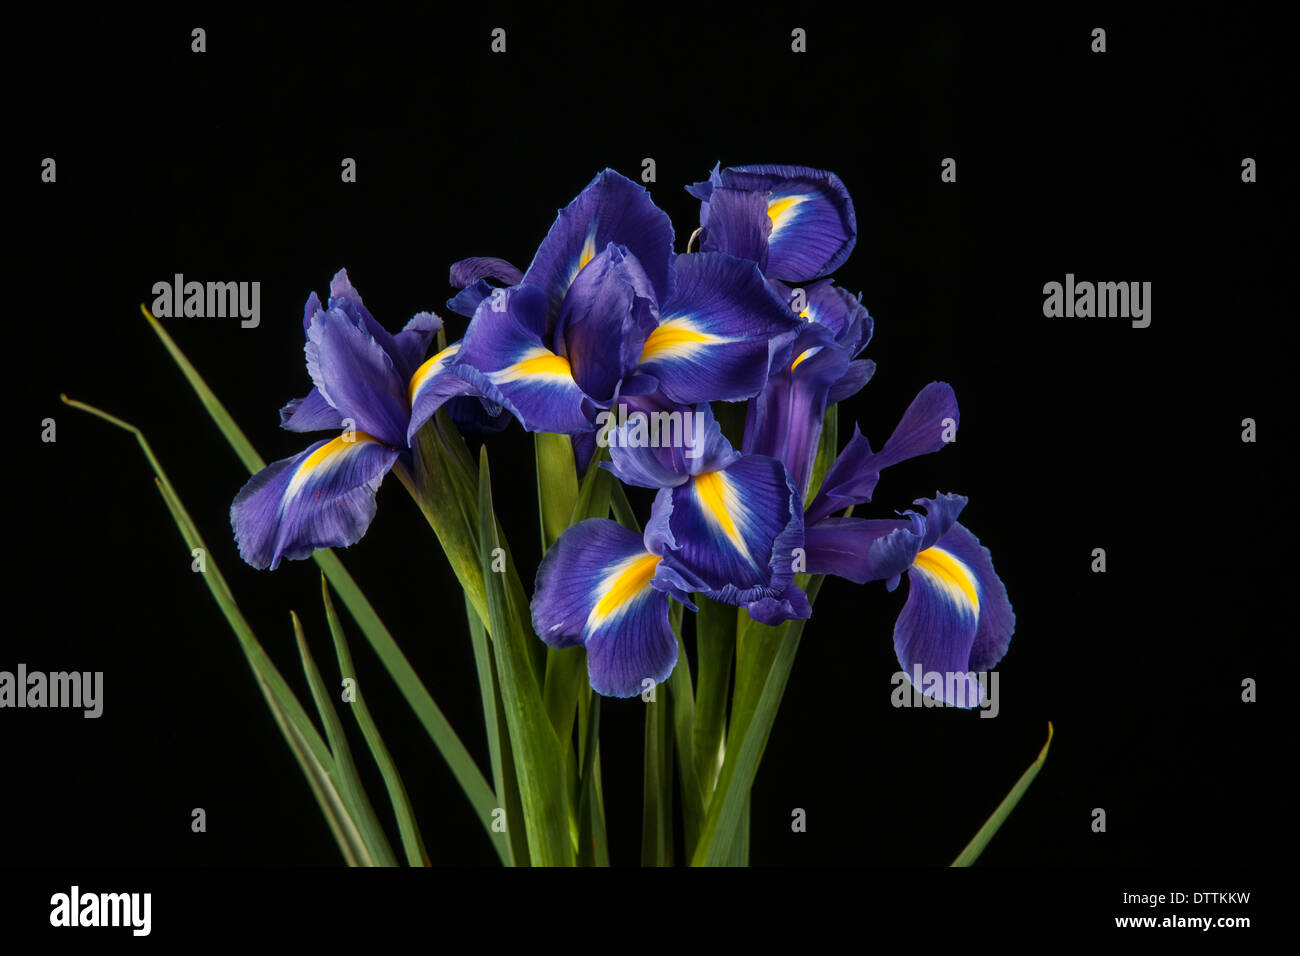 Vibrant Purple Iris On Black Background Stock Photo